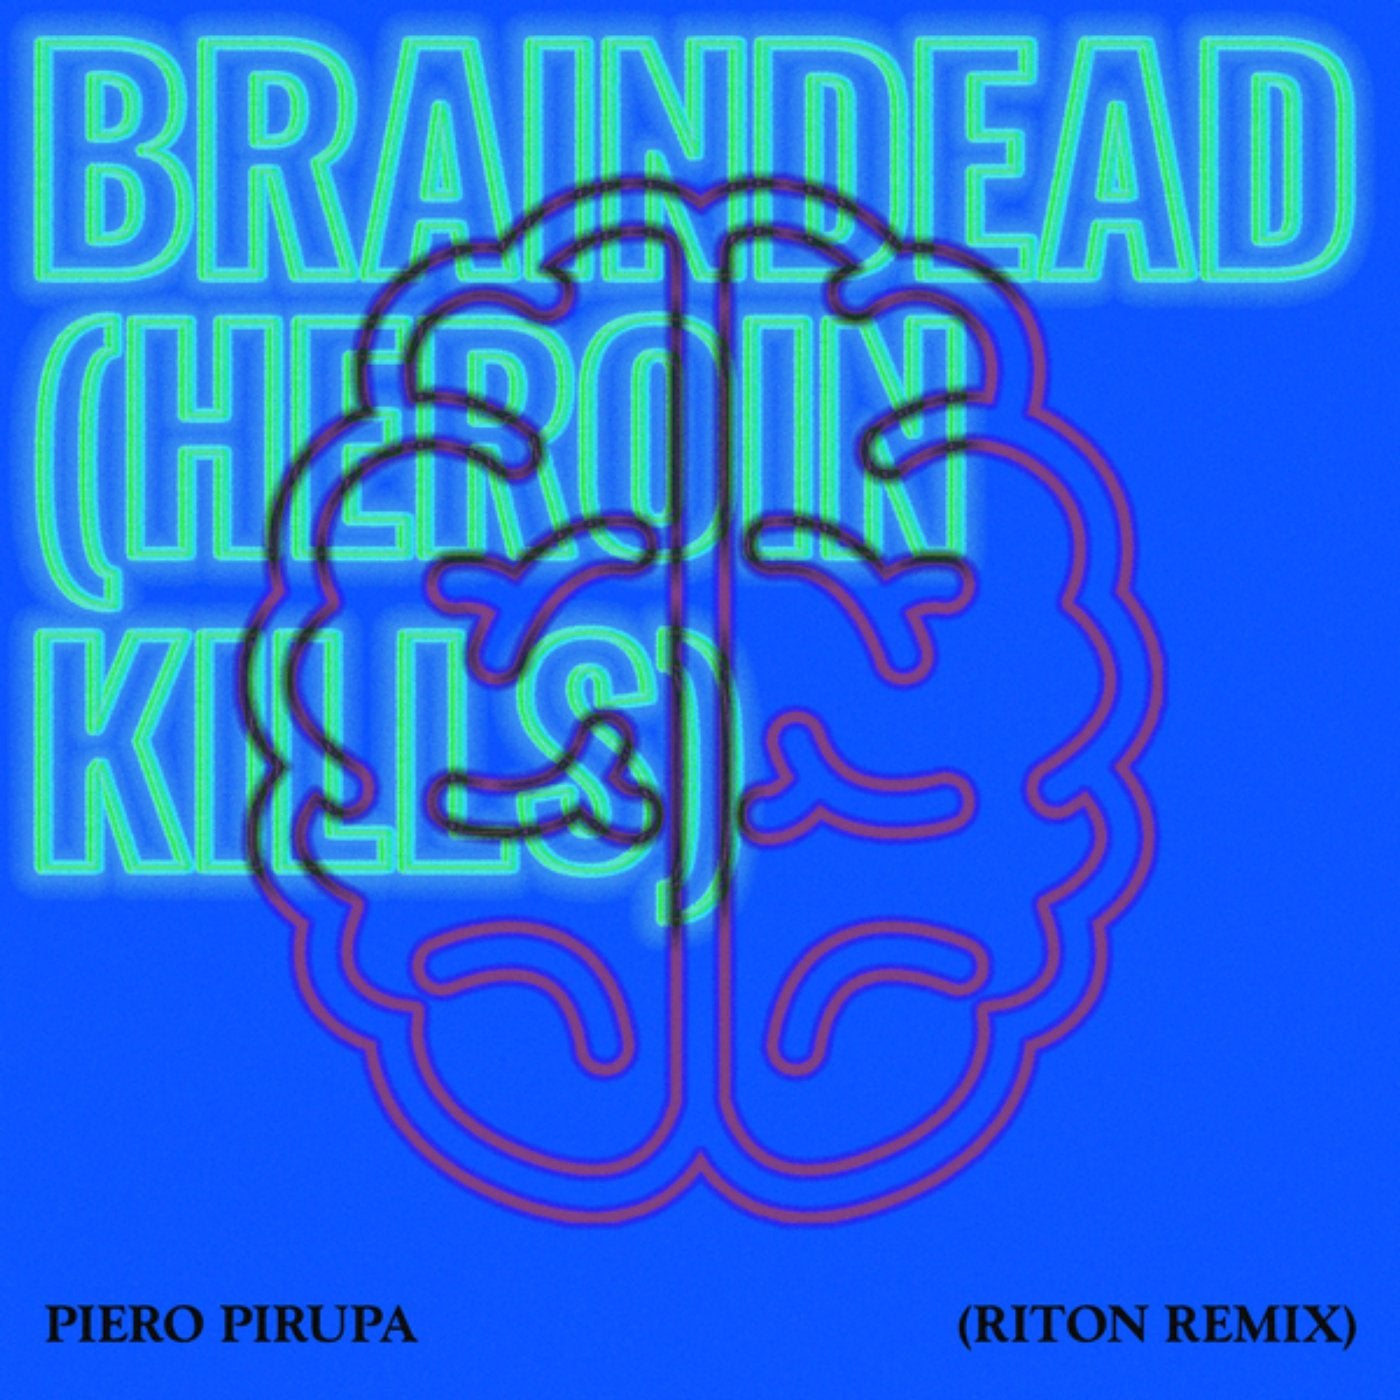 Braindead (Heroin Kills)